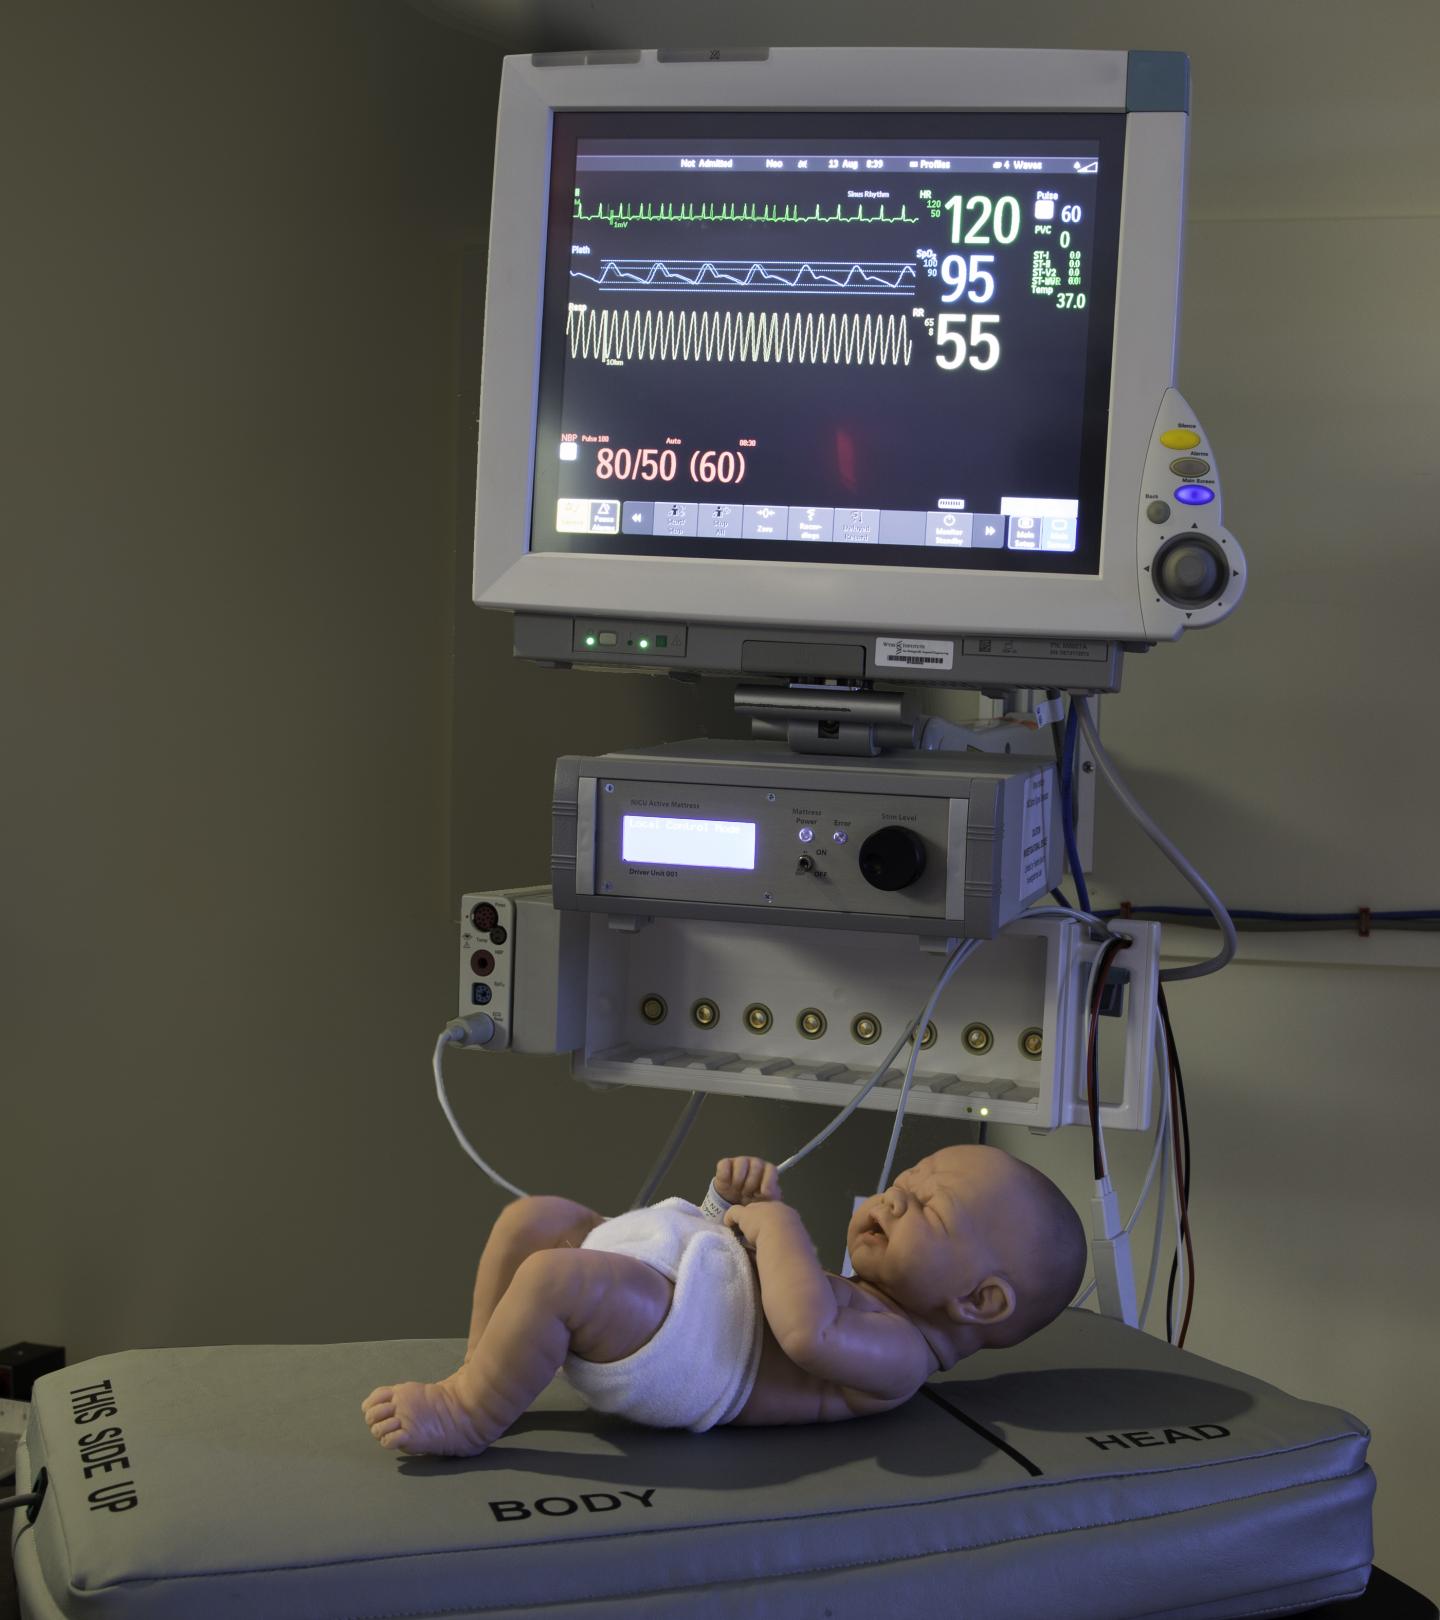 Wyss Institute's Infant Apnea Prevention Technology